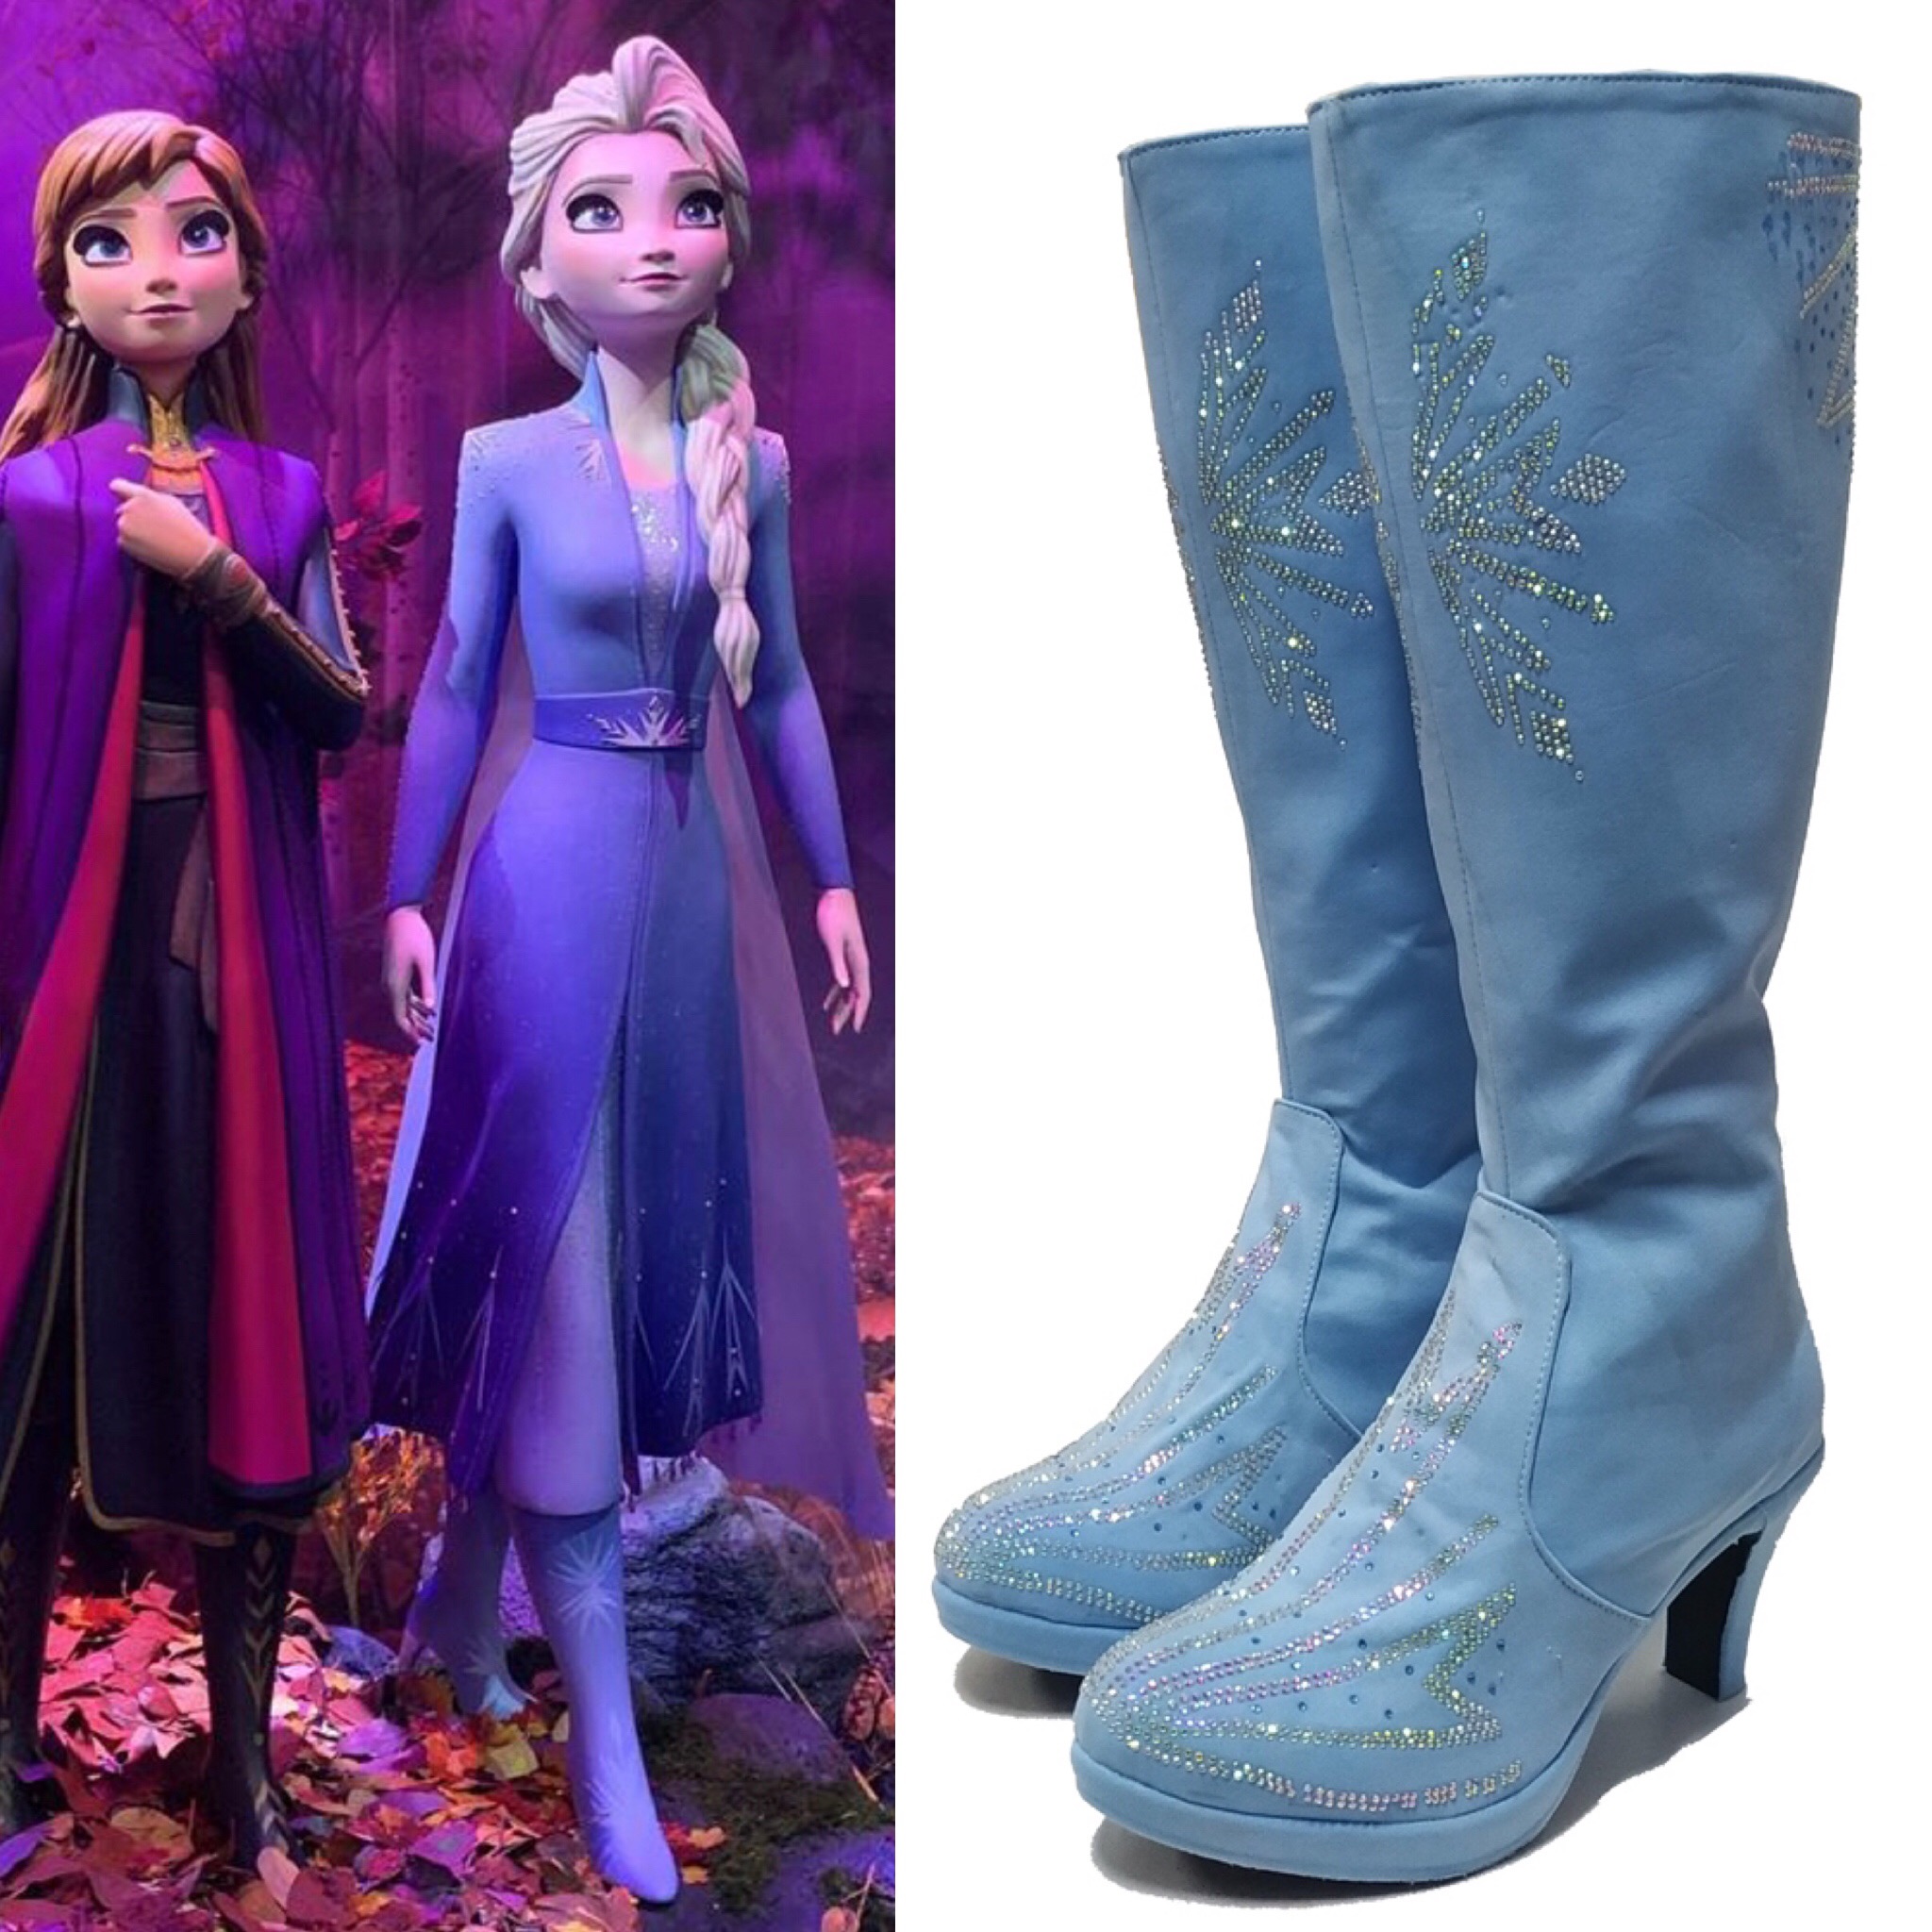 As06 Frozen2 boots